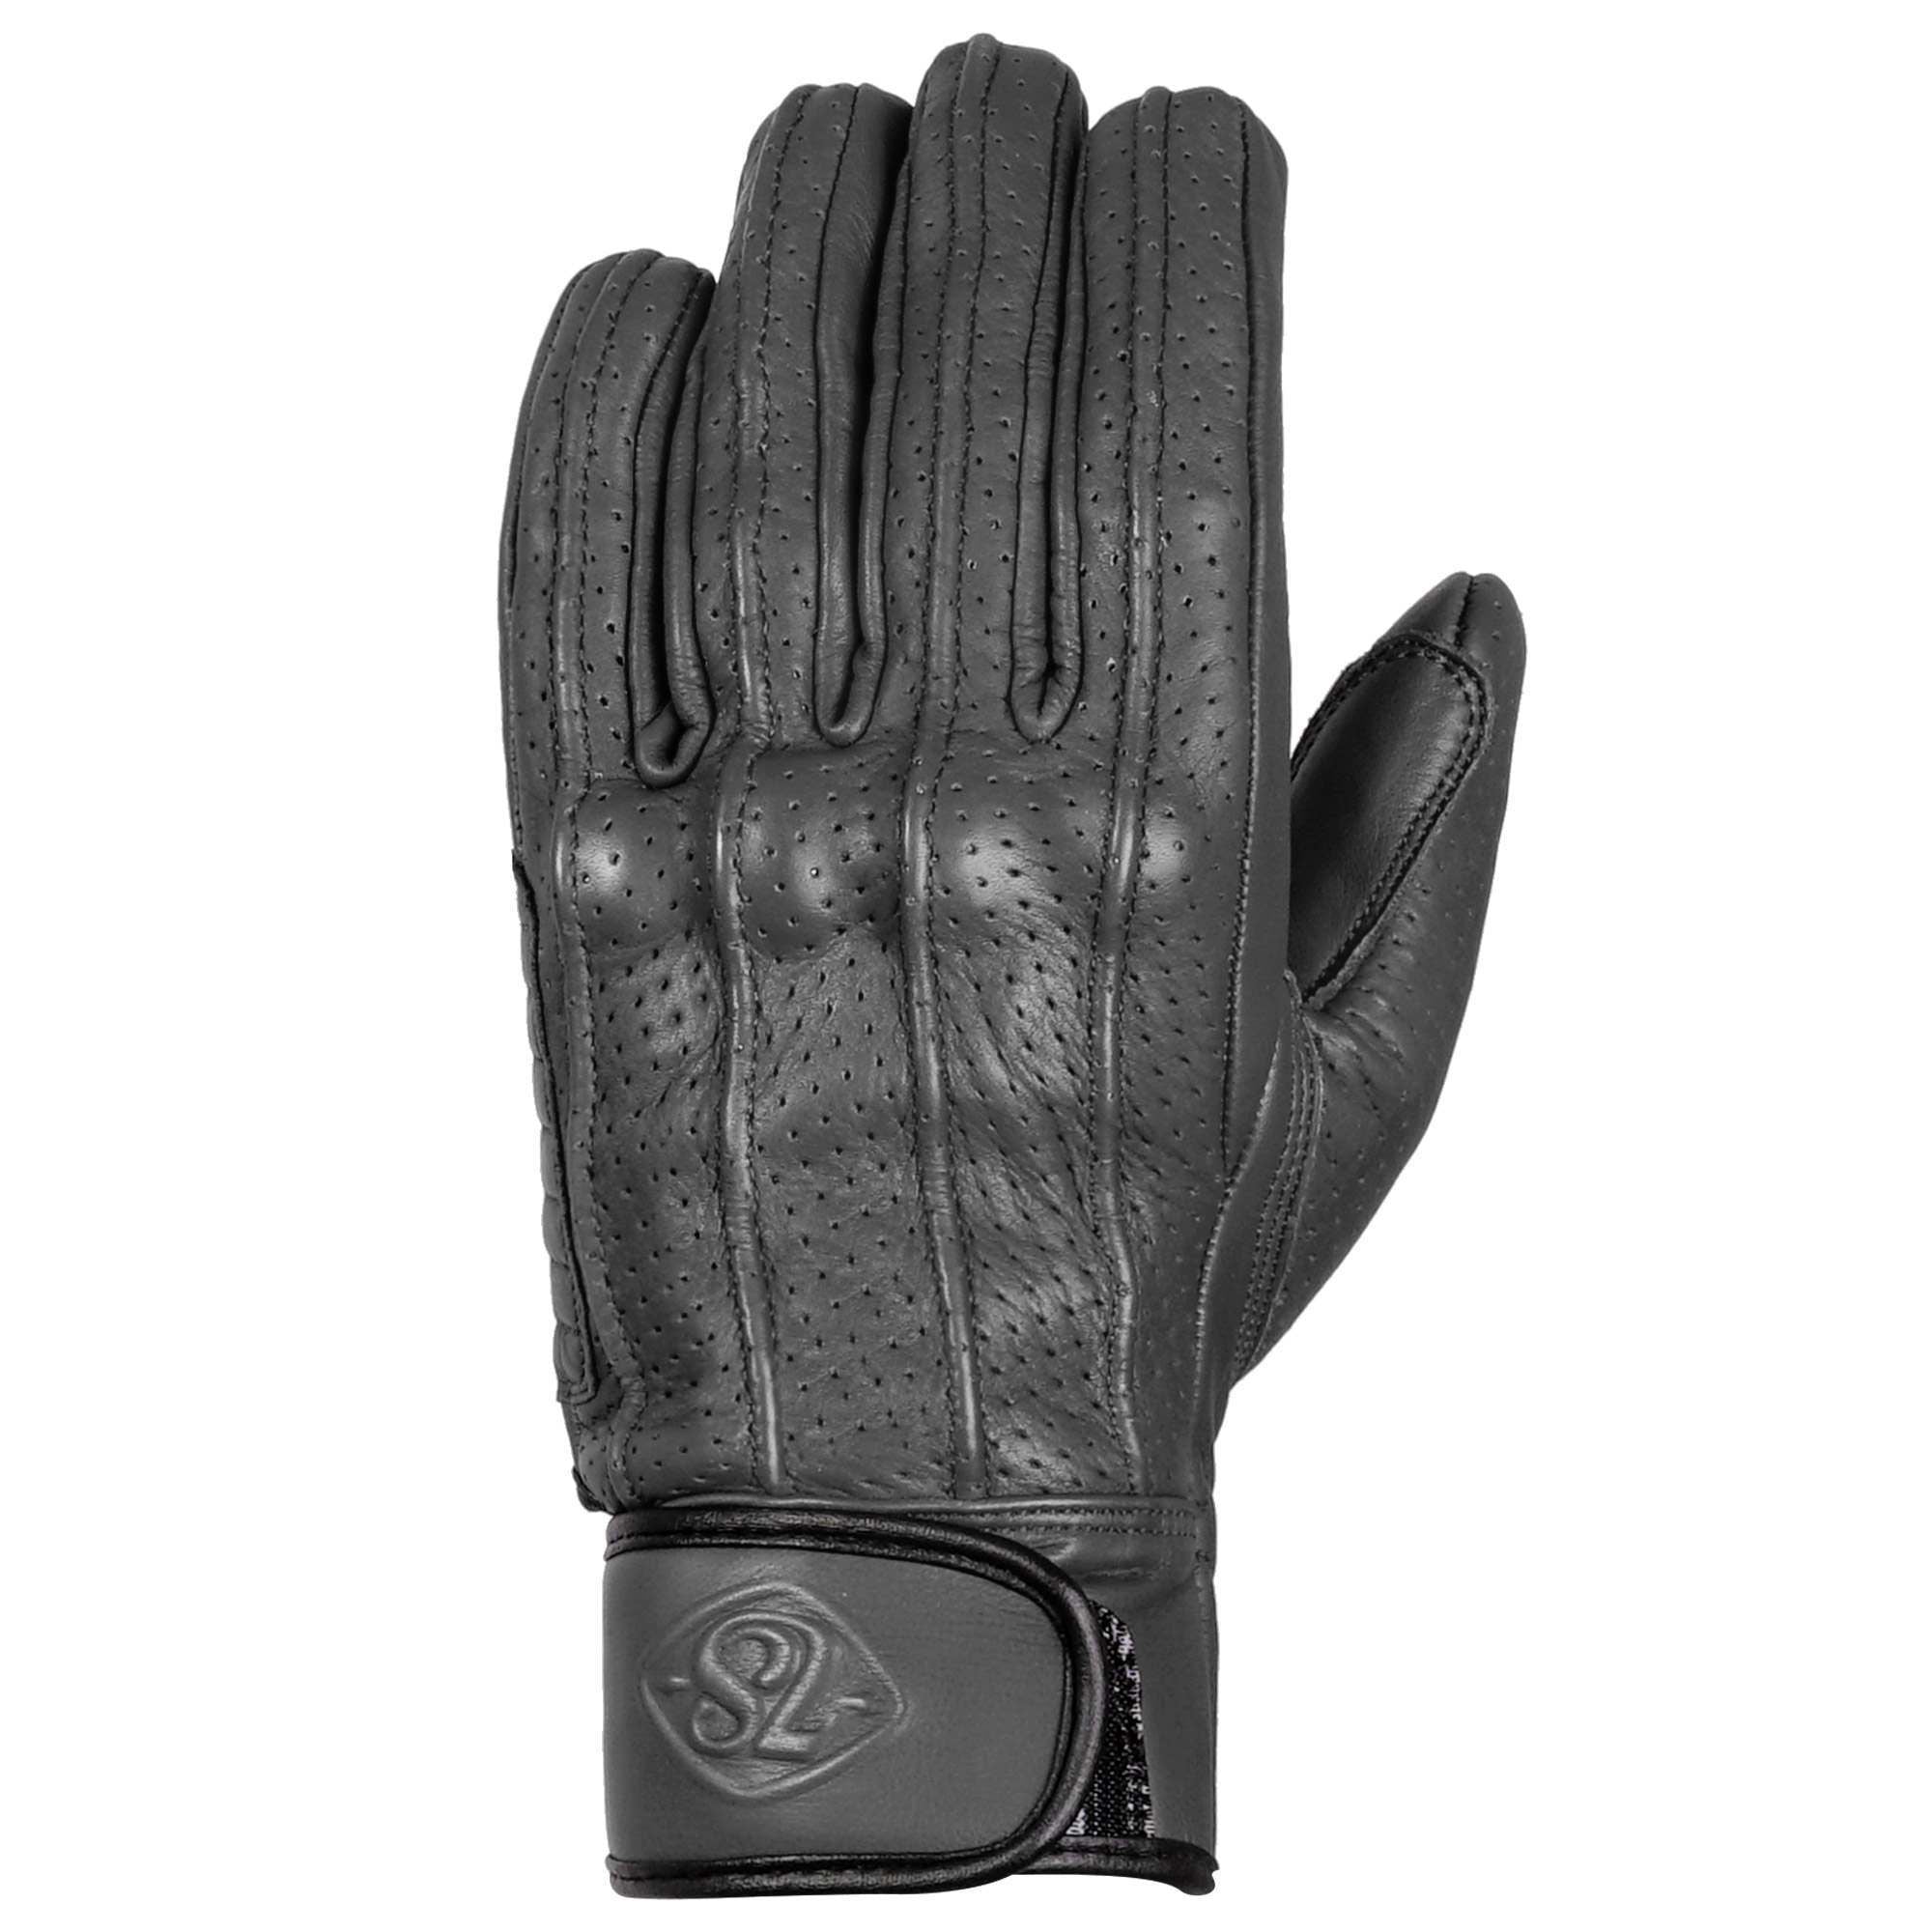 78 Motor co. Speed Gloves - MkIII Farina Grey